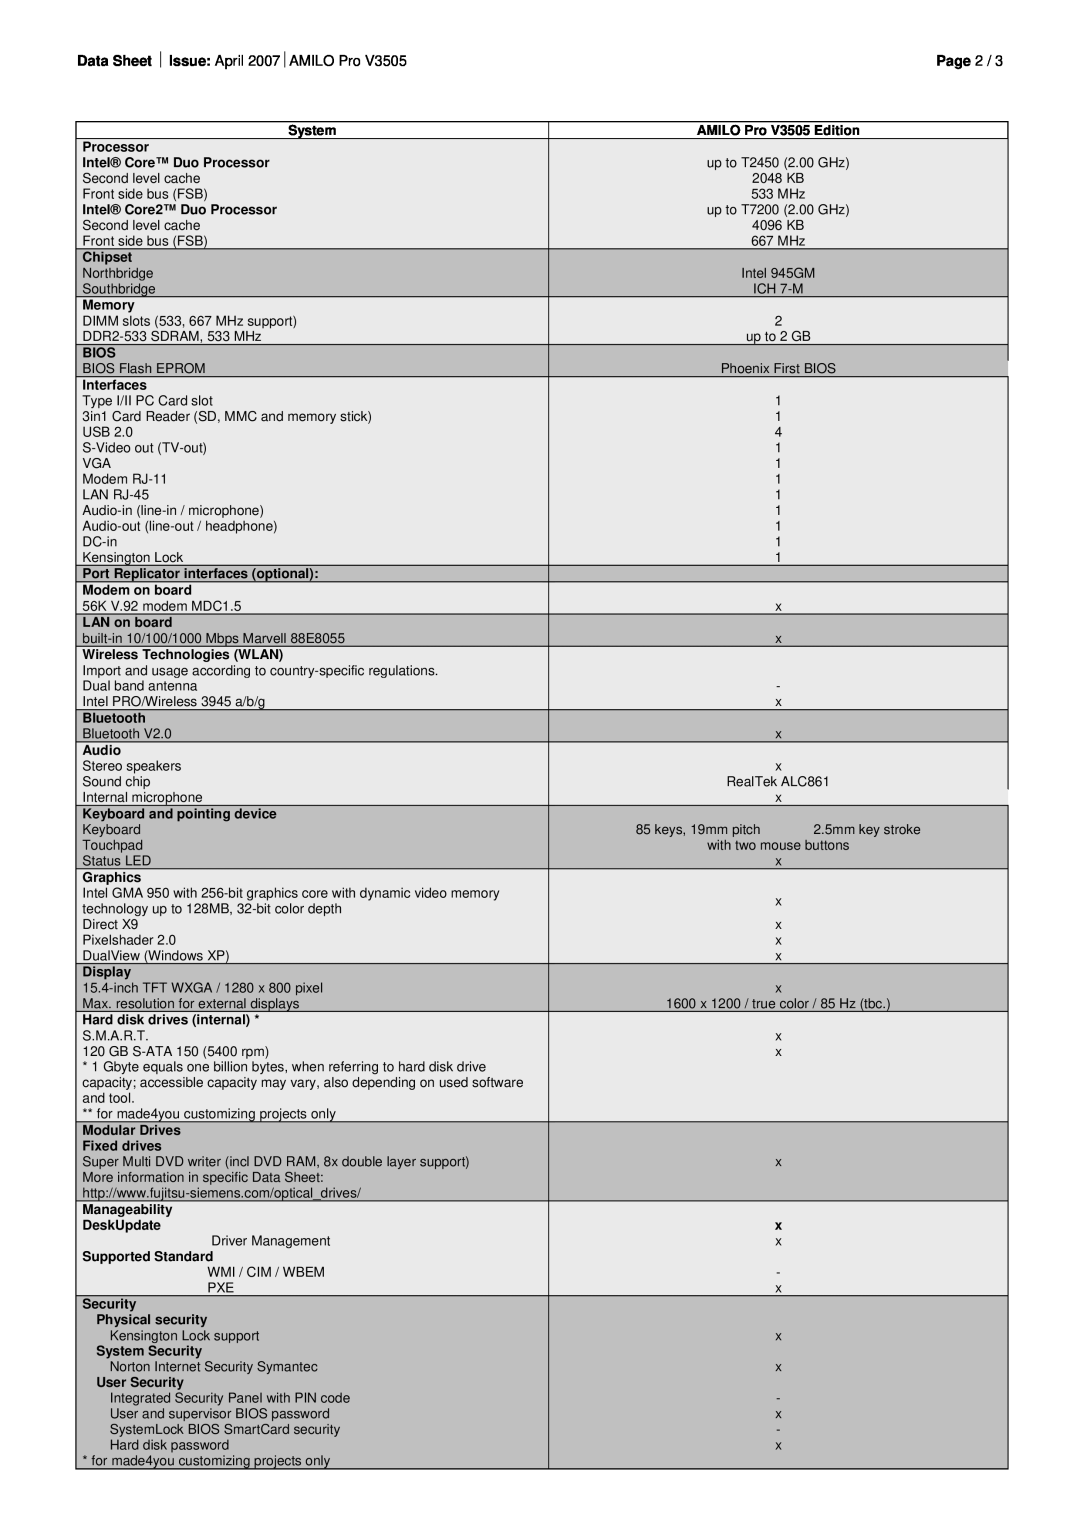 Fujitsu V3505 manual Data Sheet Issue April 2007AMILO Pro, Page 